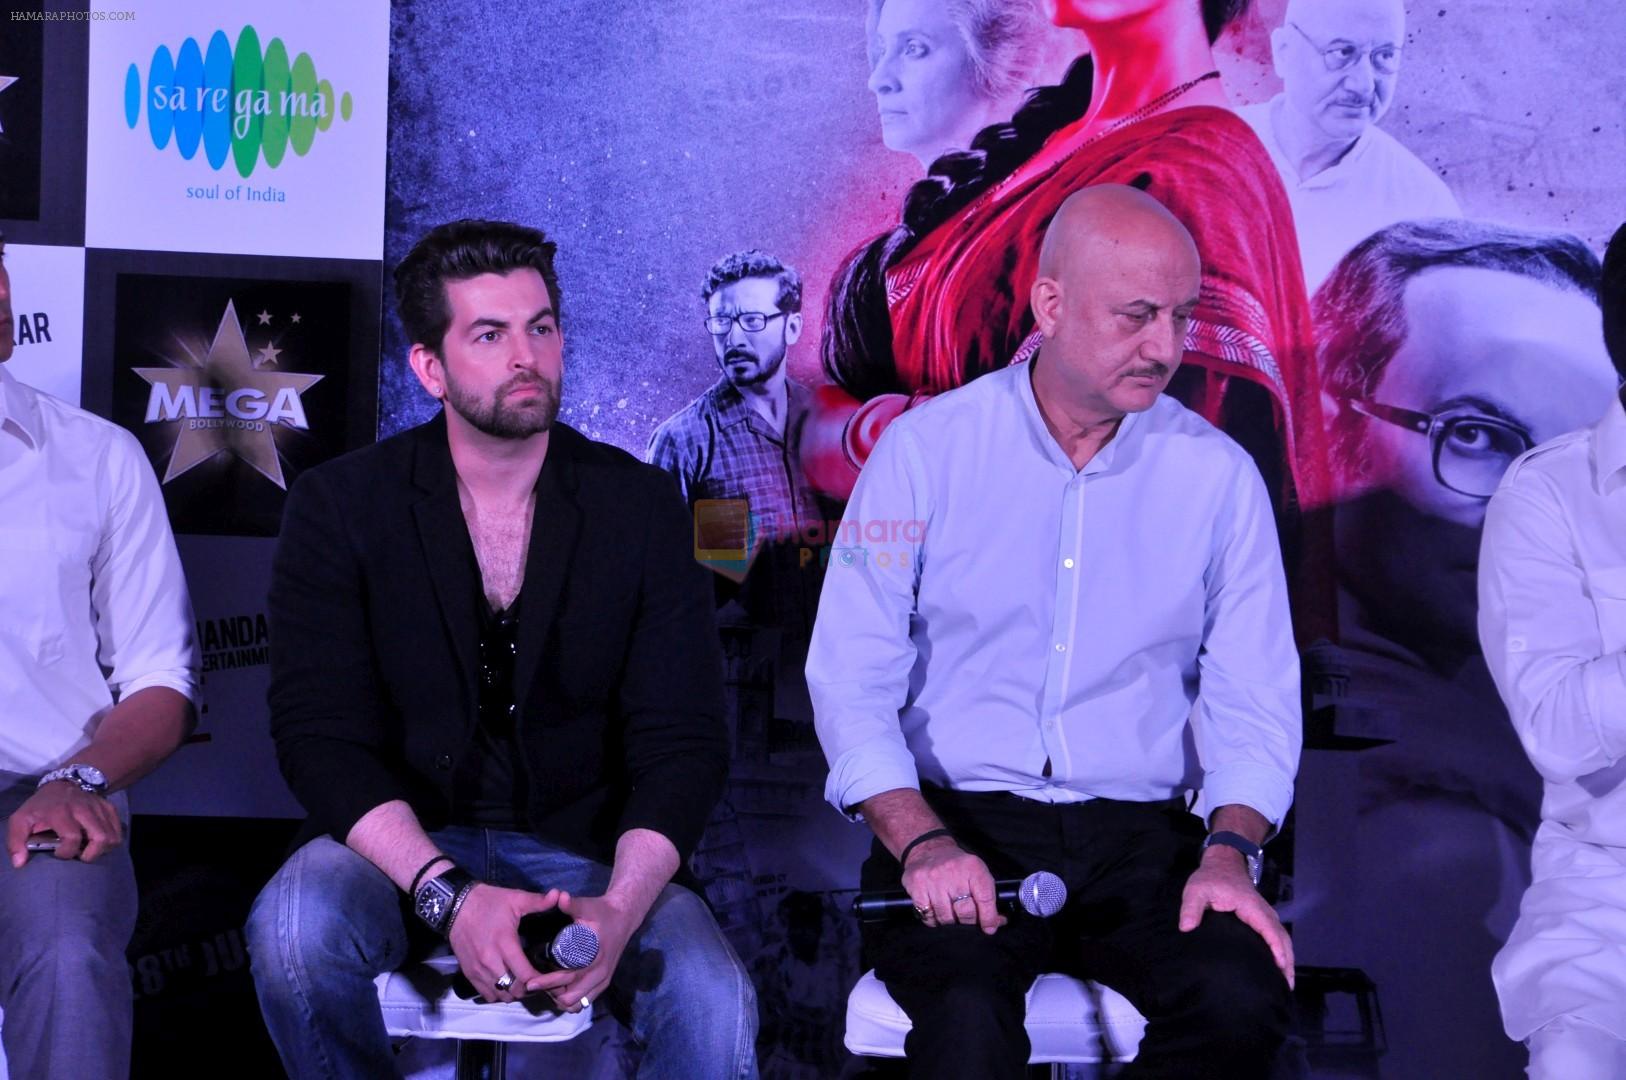 Anupam Kher, Neil Nitin Mukesh at the Trailer Launch Of Film Indu Sarkar in Mumbai on 16th June 2017